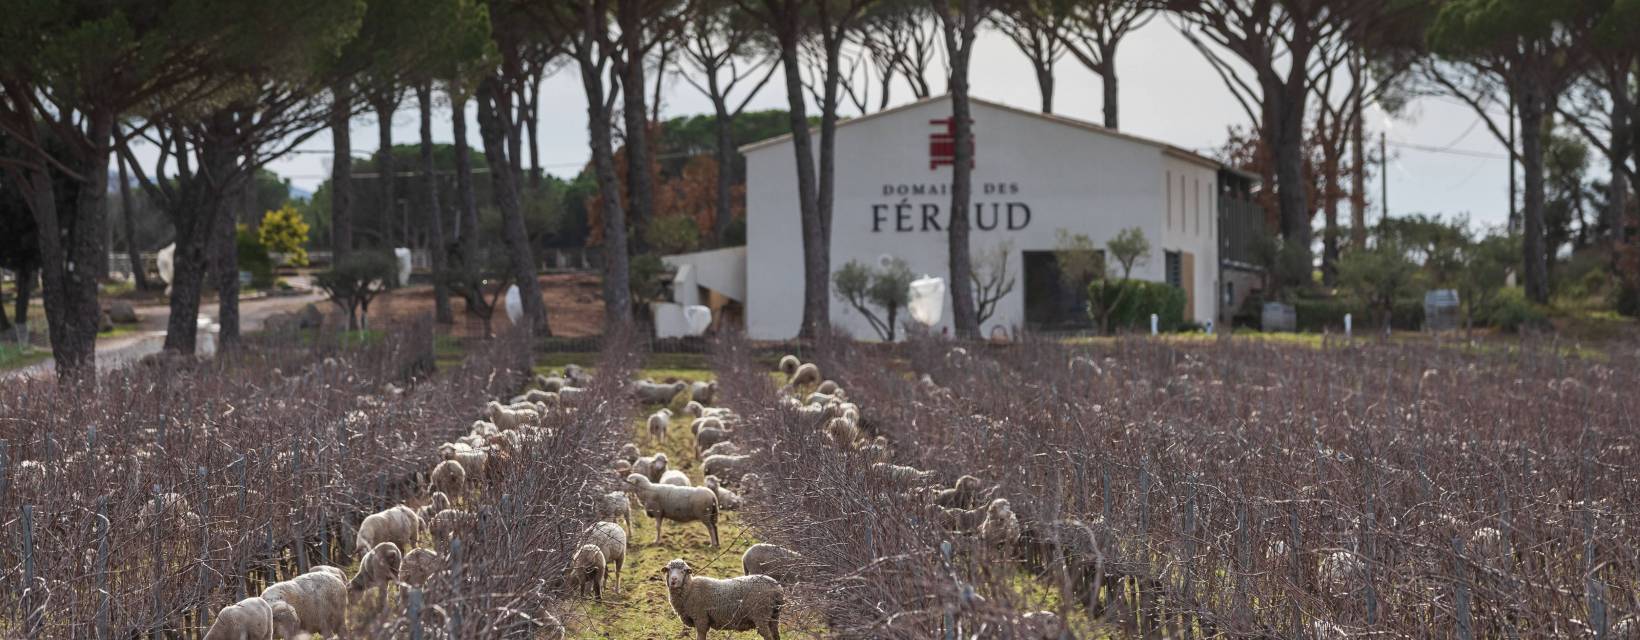 Moutons Feraud 001